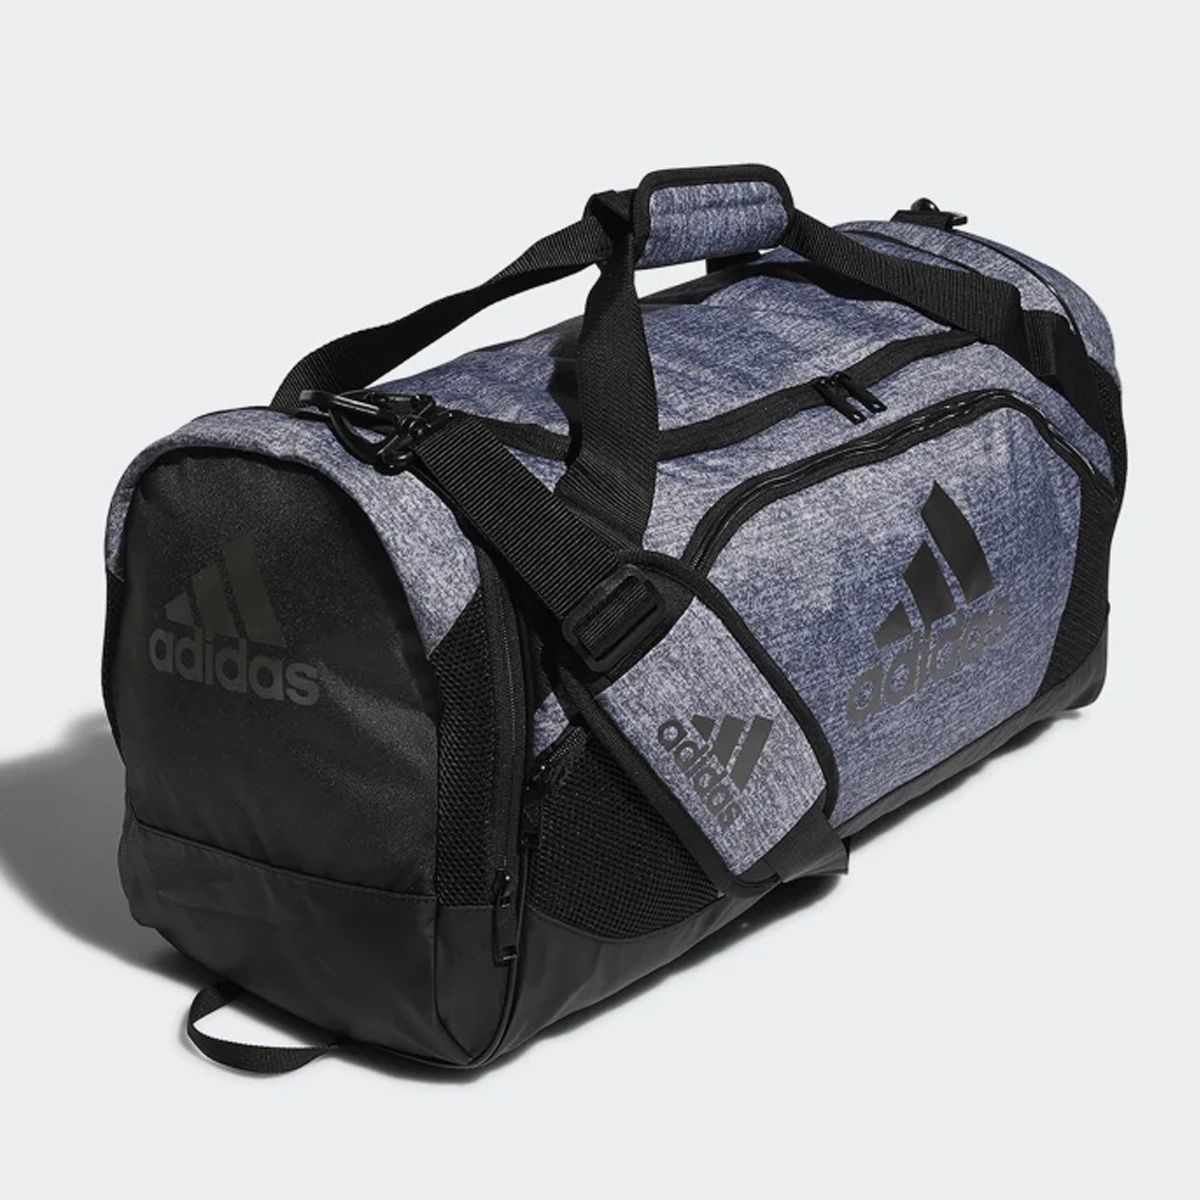 adidas travel duffel bags